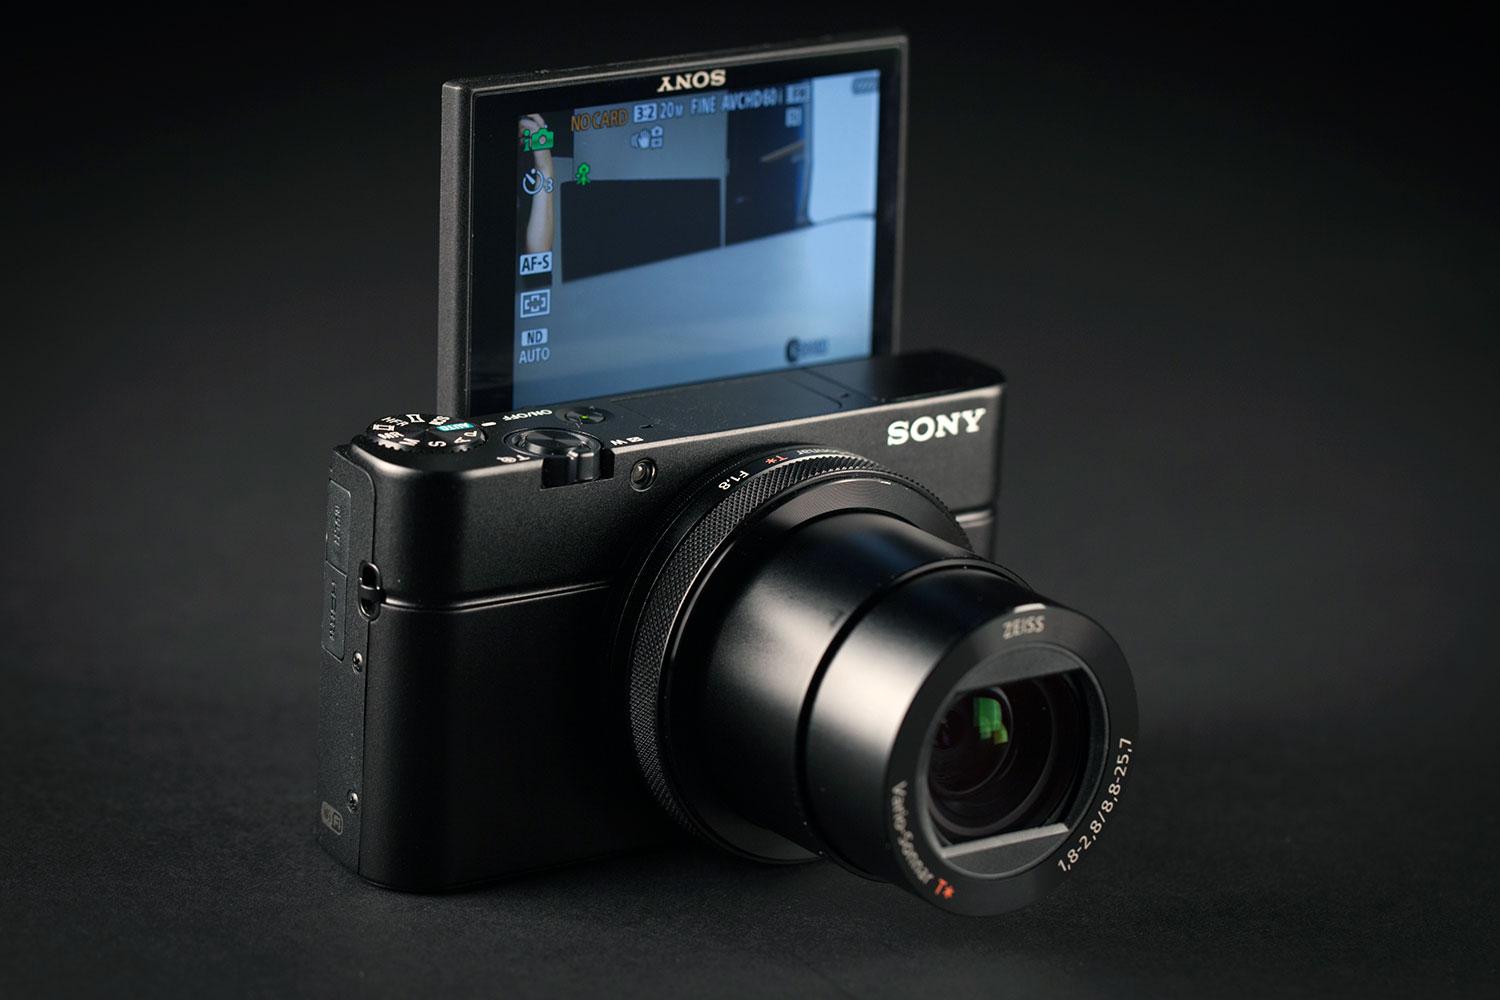 Sony Cyber-shot DSC-RX100 Va Camera, 4K, 20.1MP, 2.9x Optical Zoom, Wi-Fi